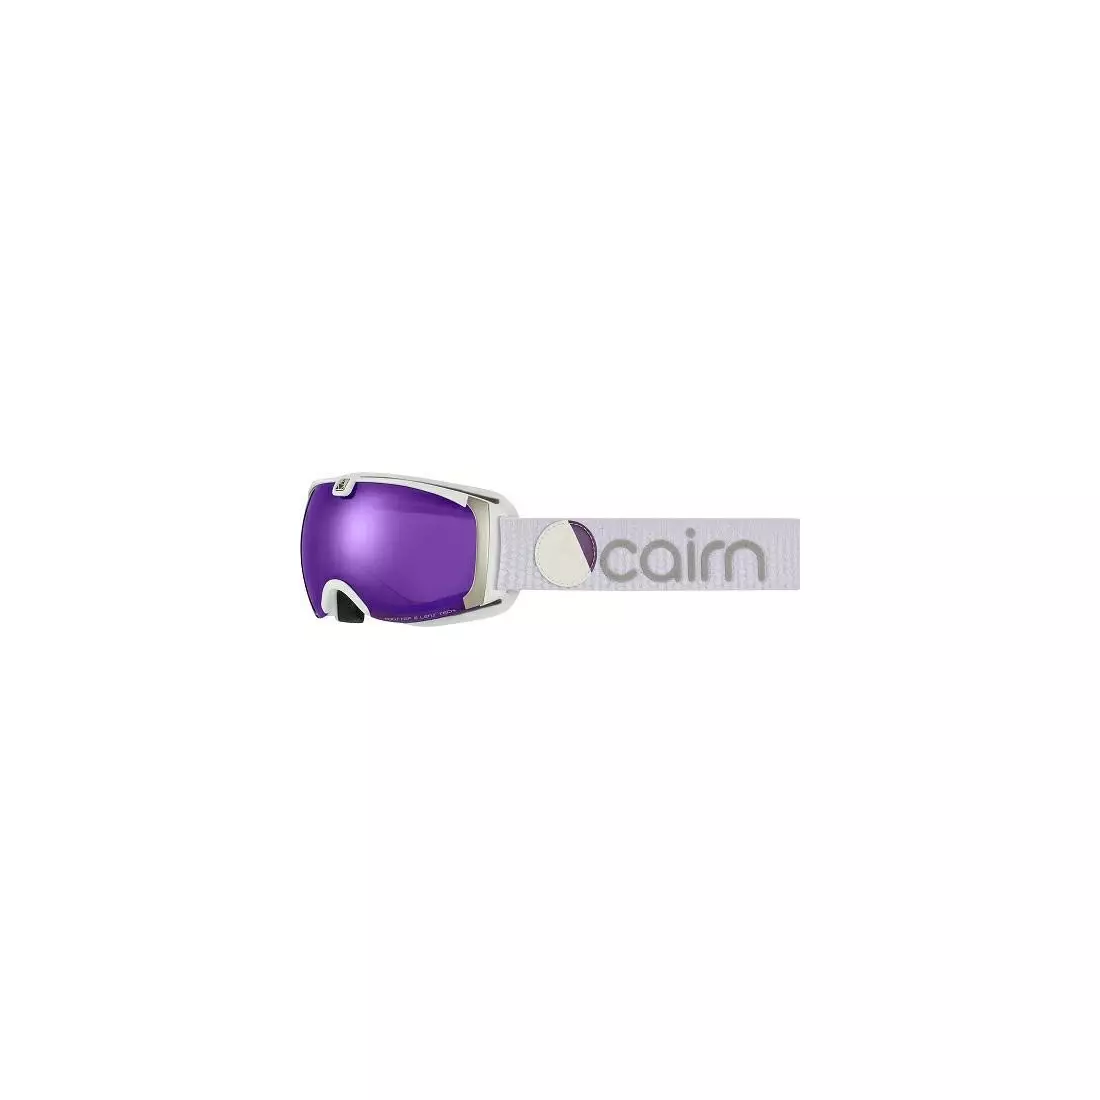 CAIRN ski / snowboard goggles PEARL SPX3000 IUM mat white purple